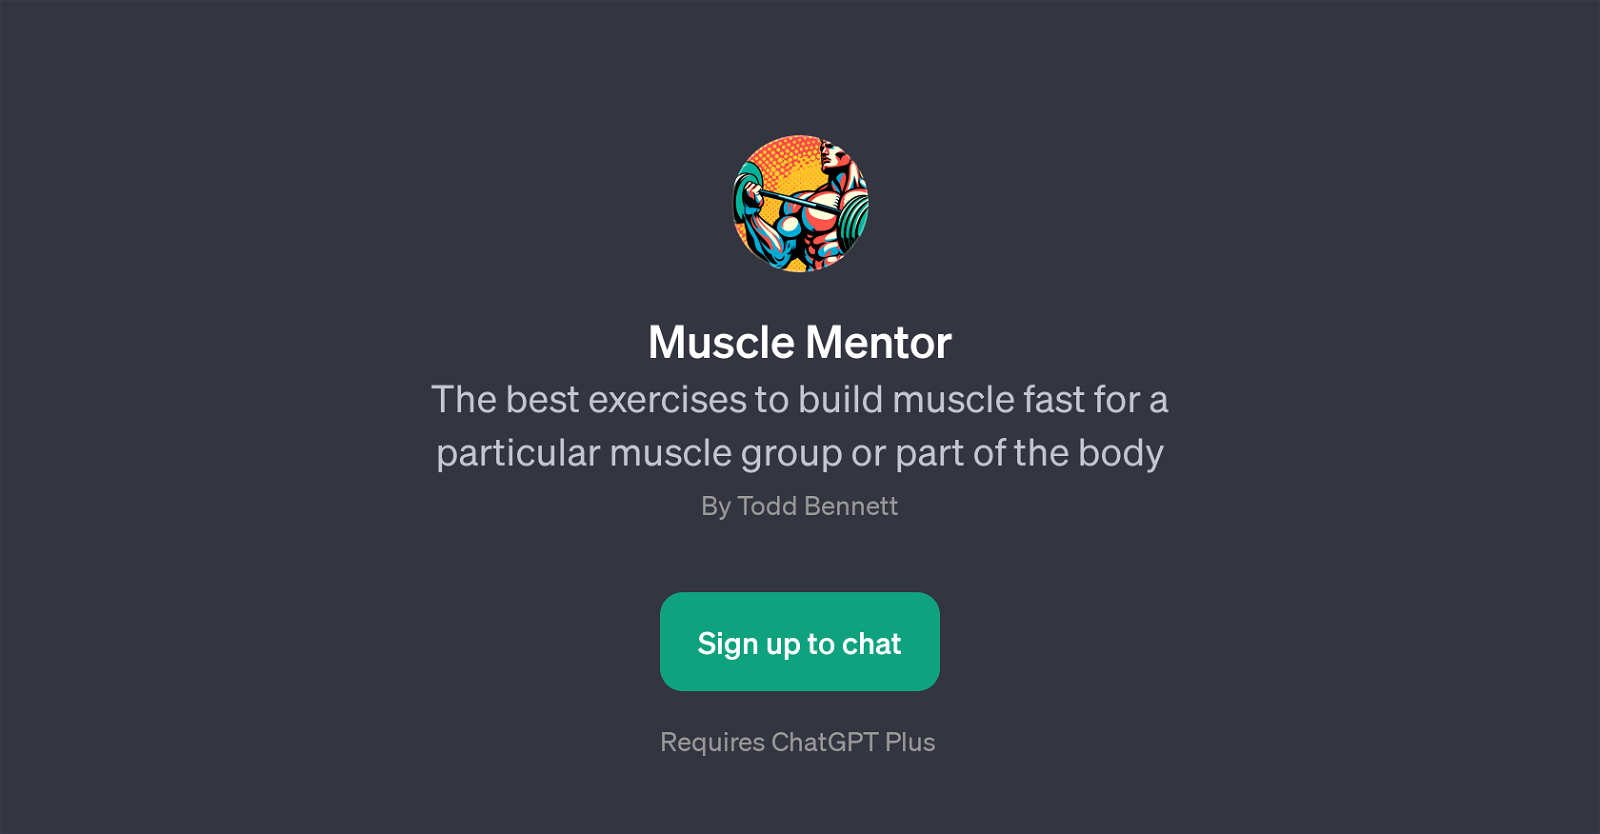 Muscle Mentor website